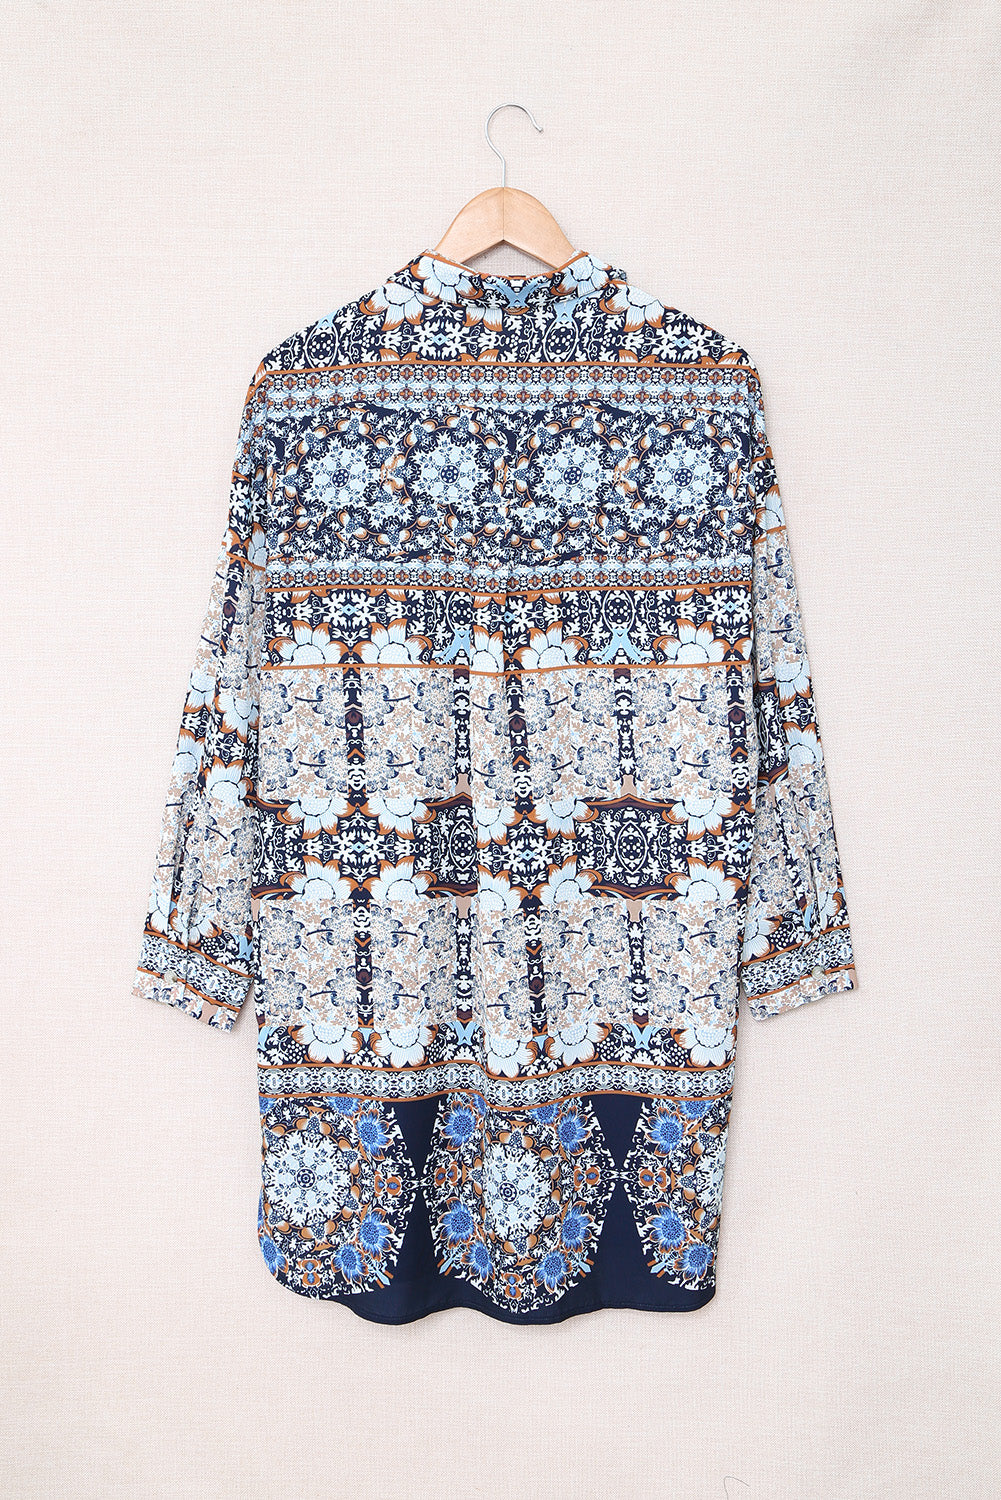 Sky Blue Blue/Brown/Apricot Vintage Floral Pattern Shirt Mini Dress LC2211081-4